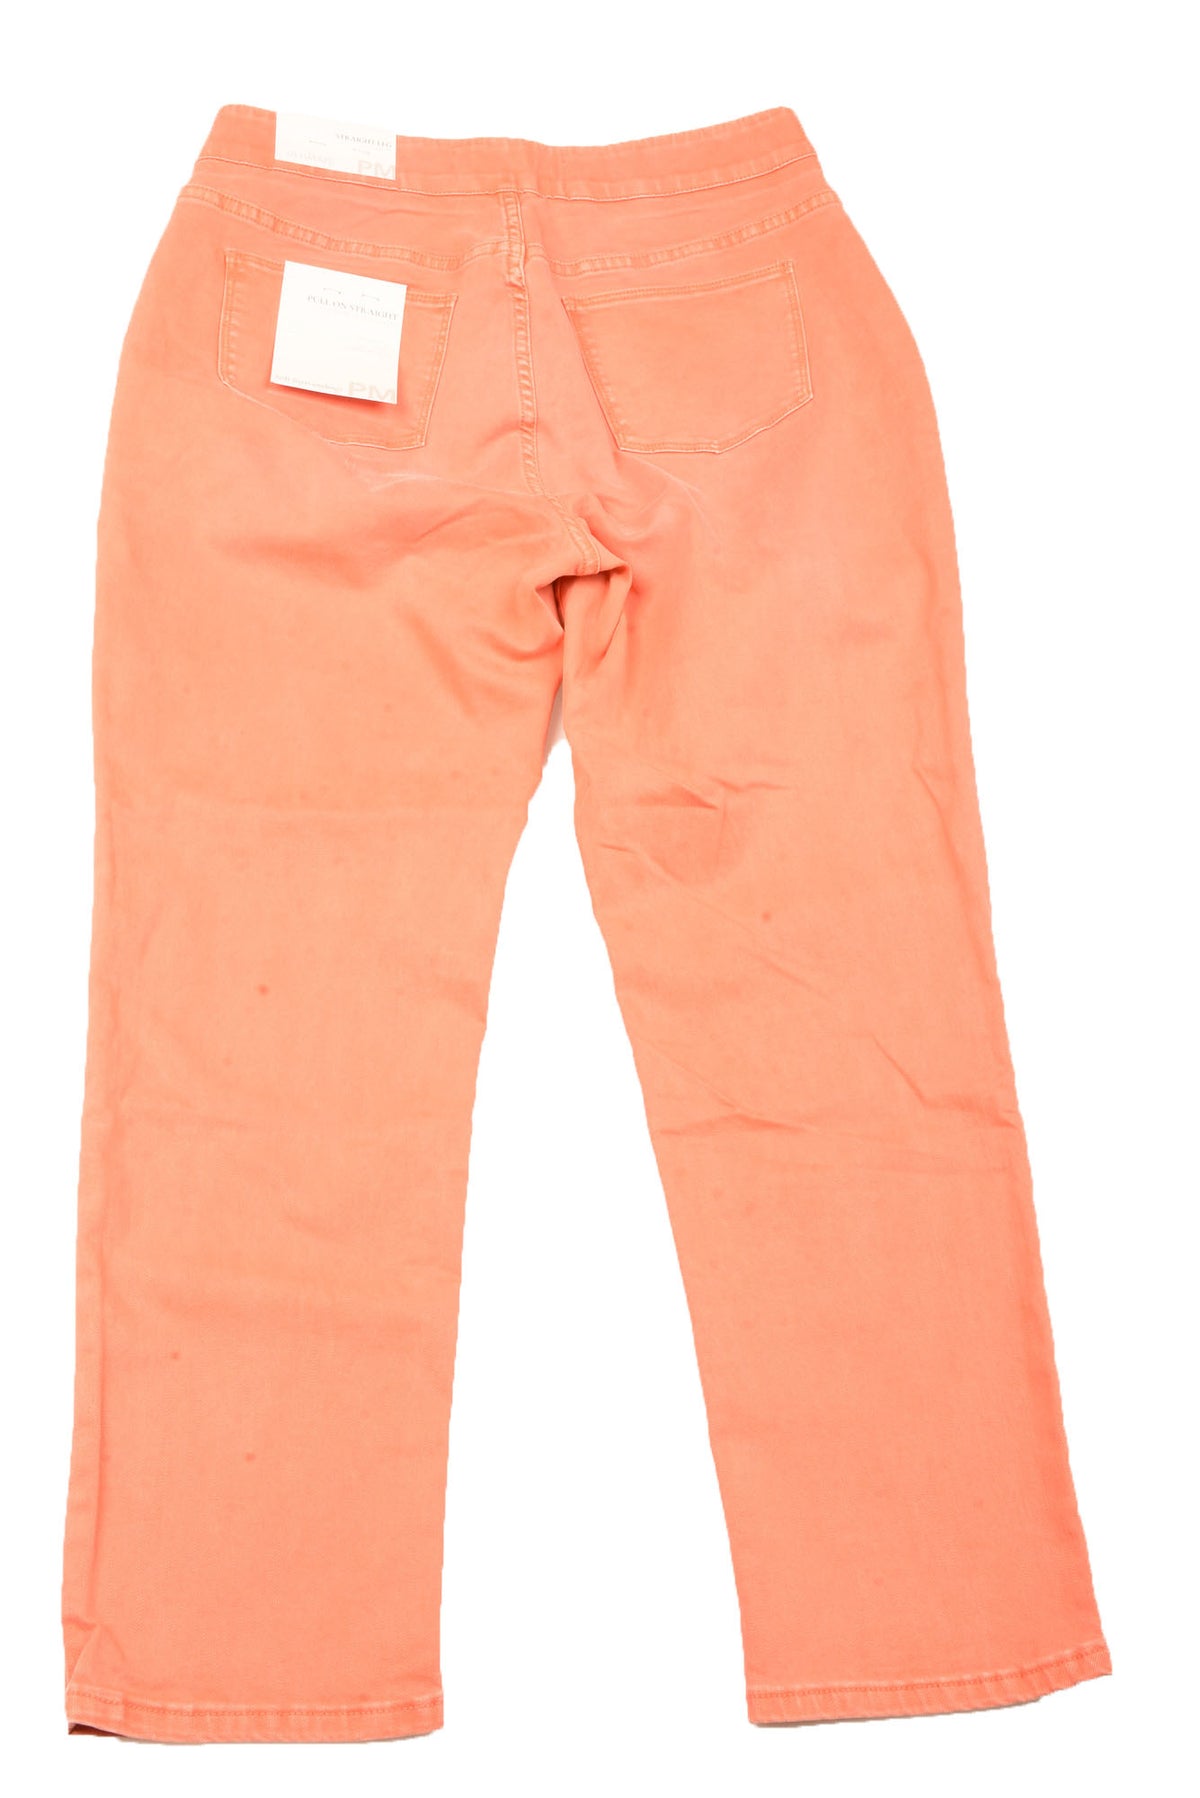 Soft Surroundings Size PM (10-12) Women&#39;s Jeans